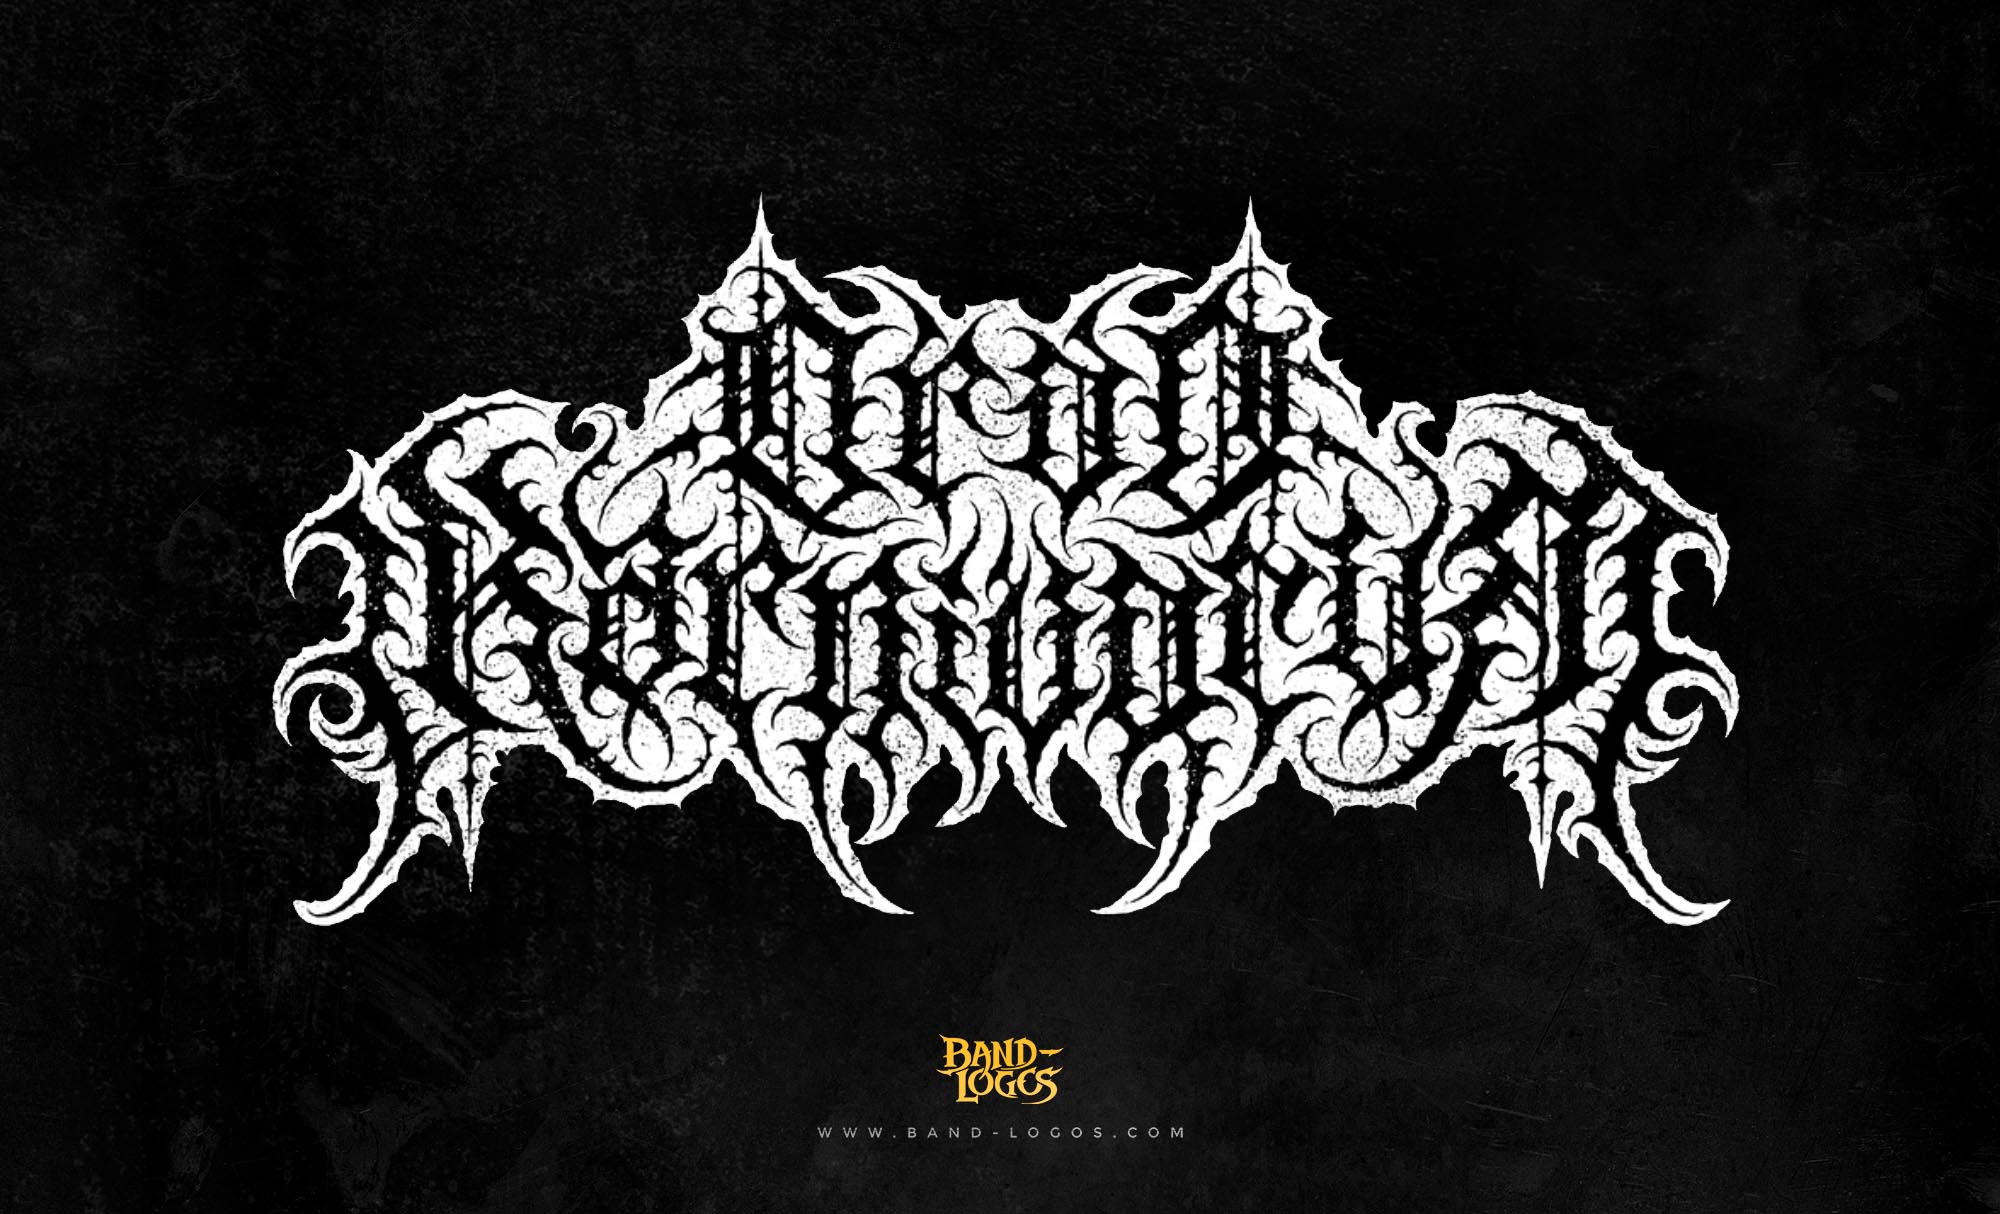 blackened death metal logo